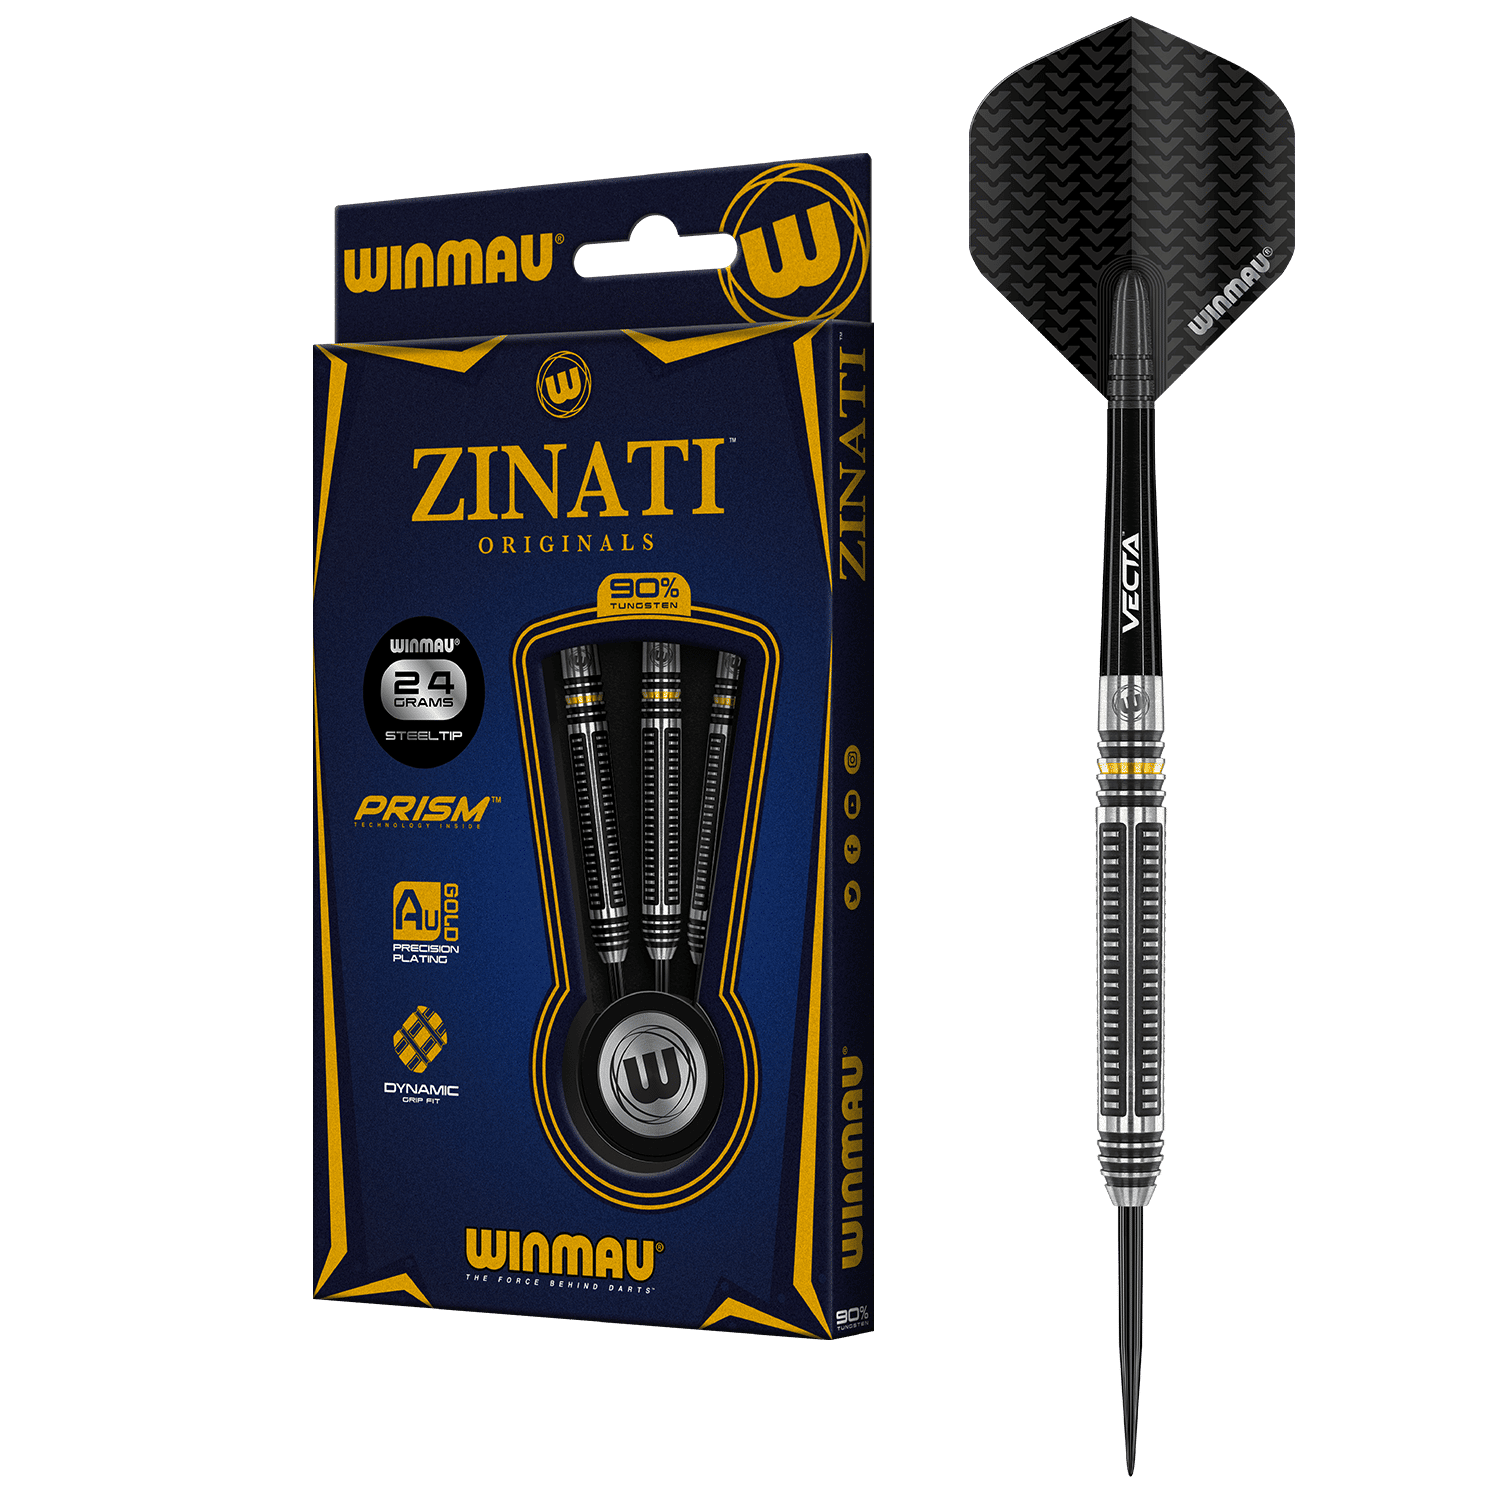 Winmau Zinati Steeldarts